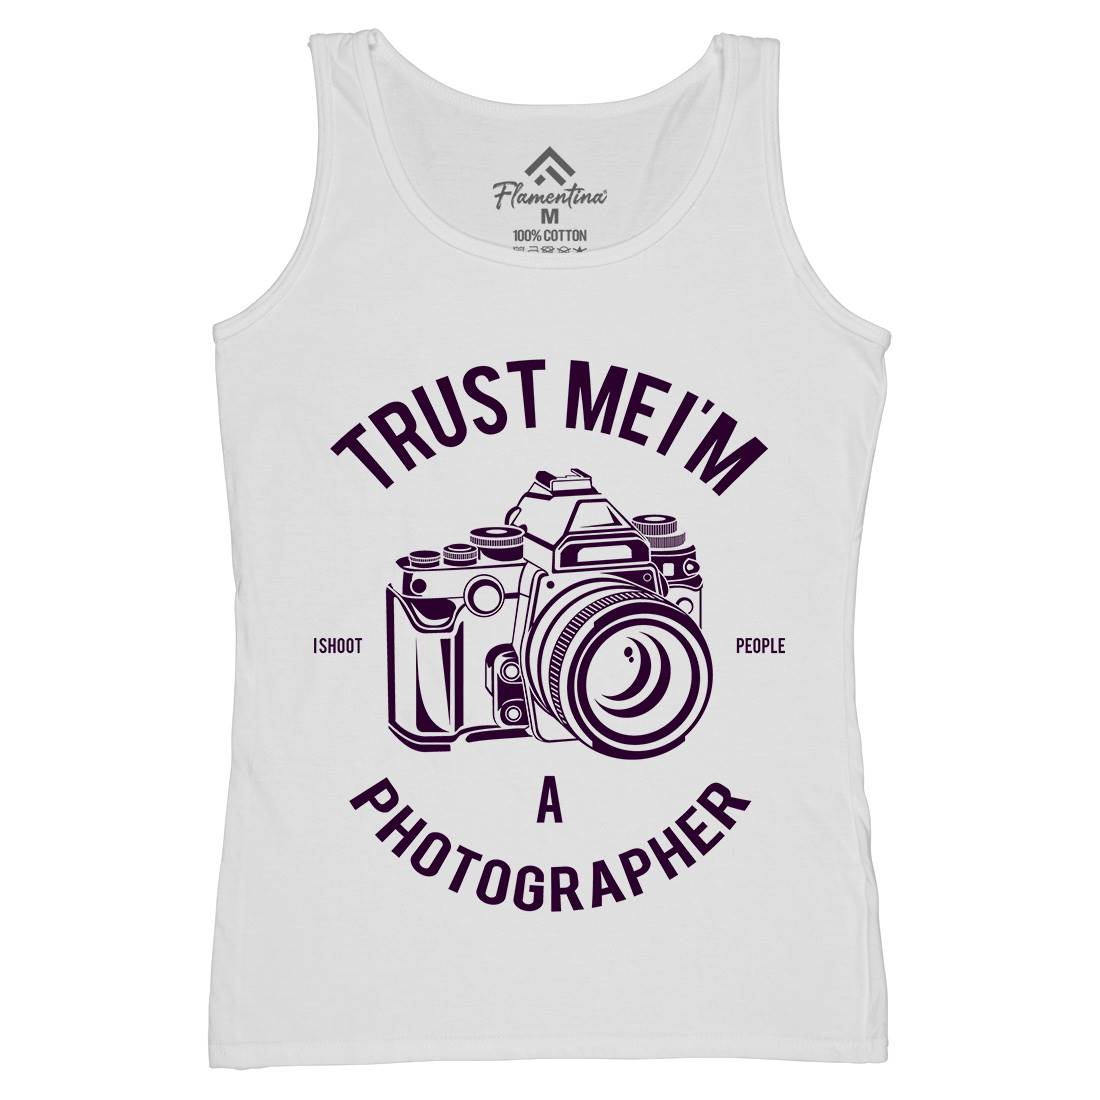 Photographer Womens Organic Tank Top Vest Media A110